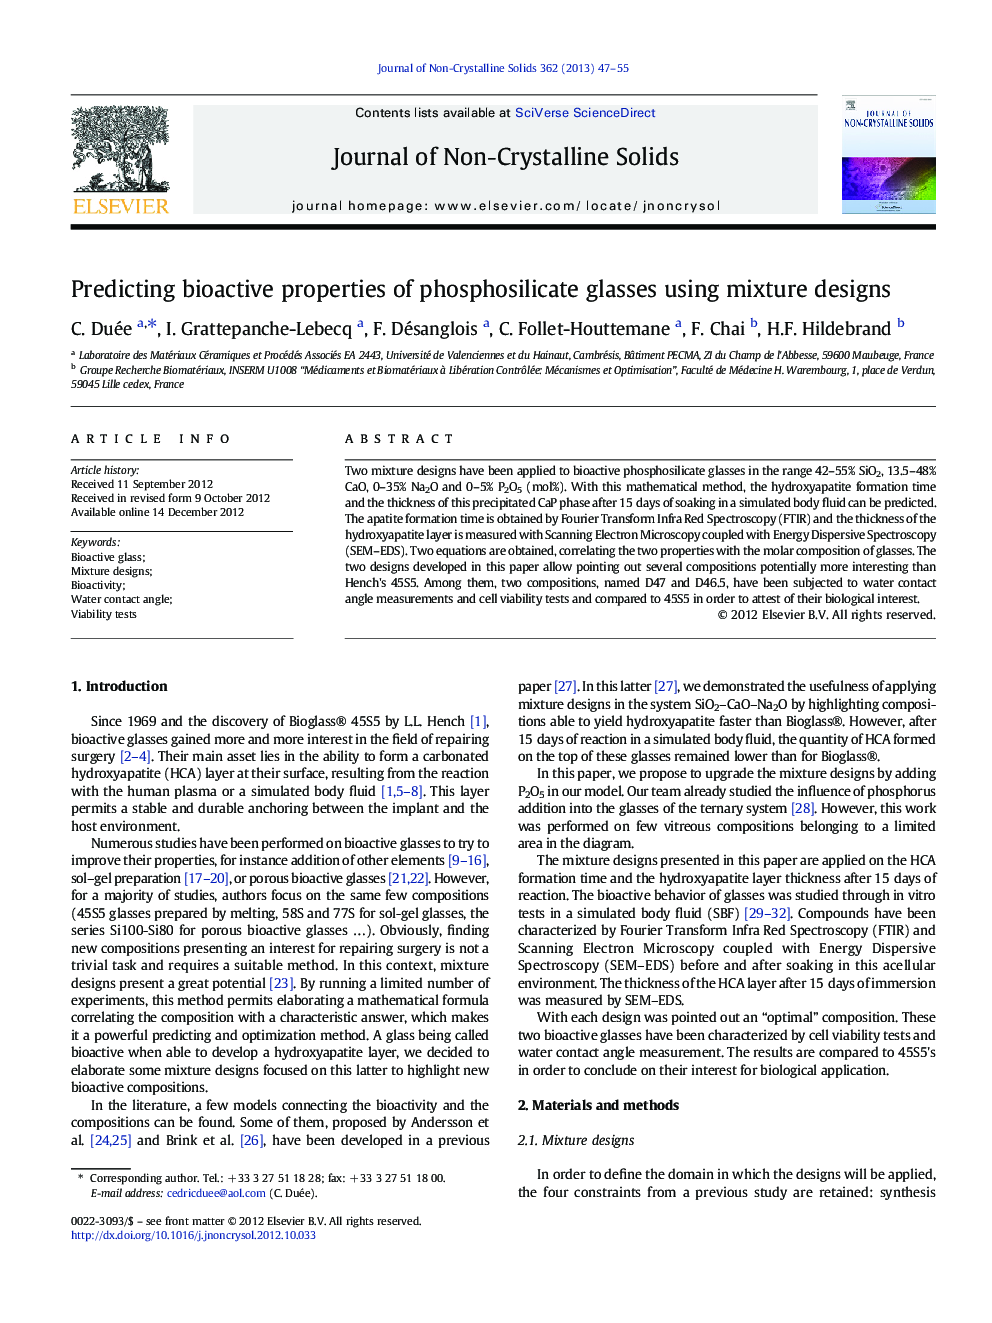 Predicting bioactive properties of phosphosilicate glasses using mixture designs